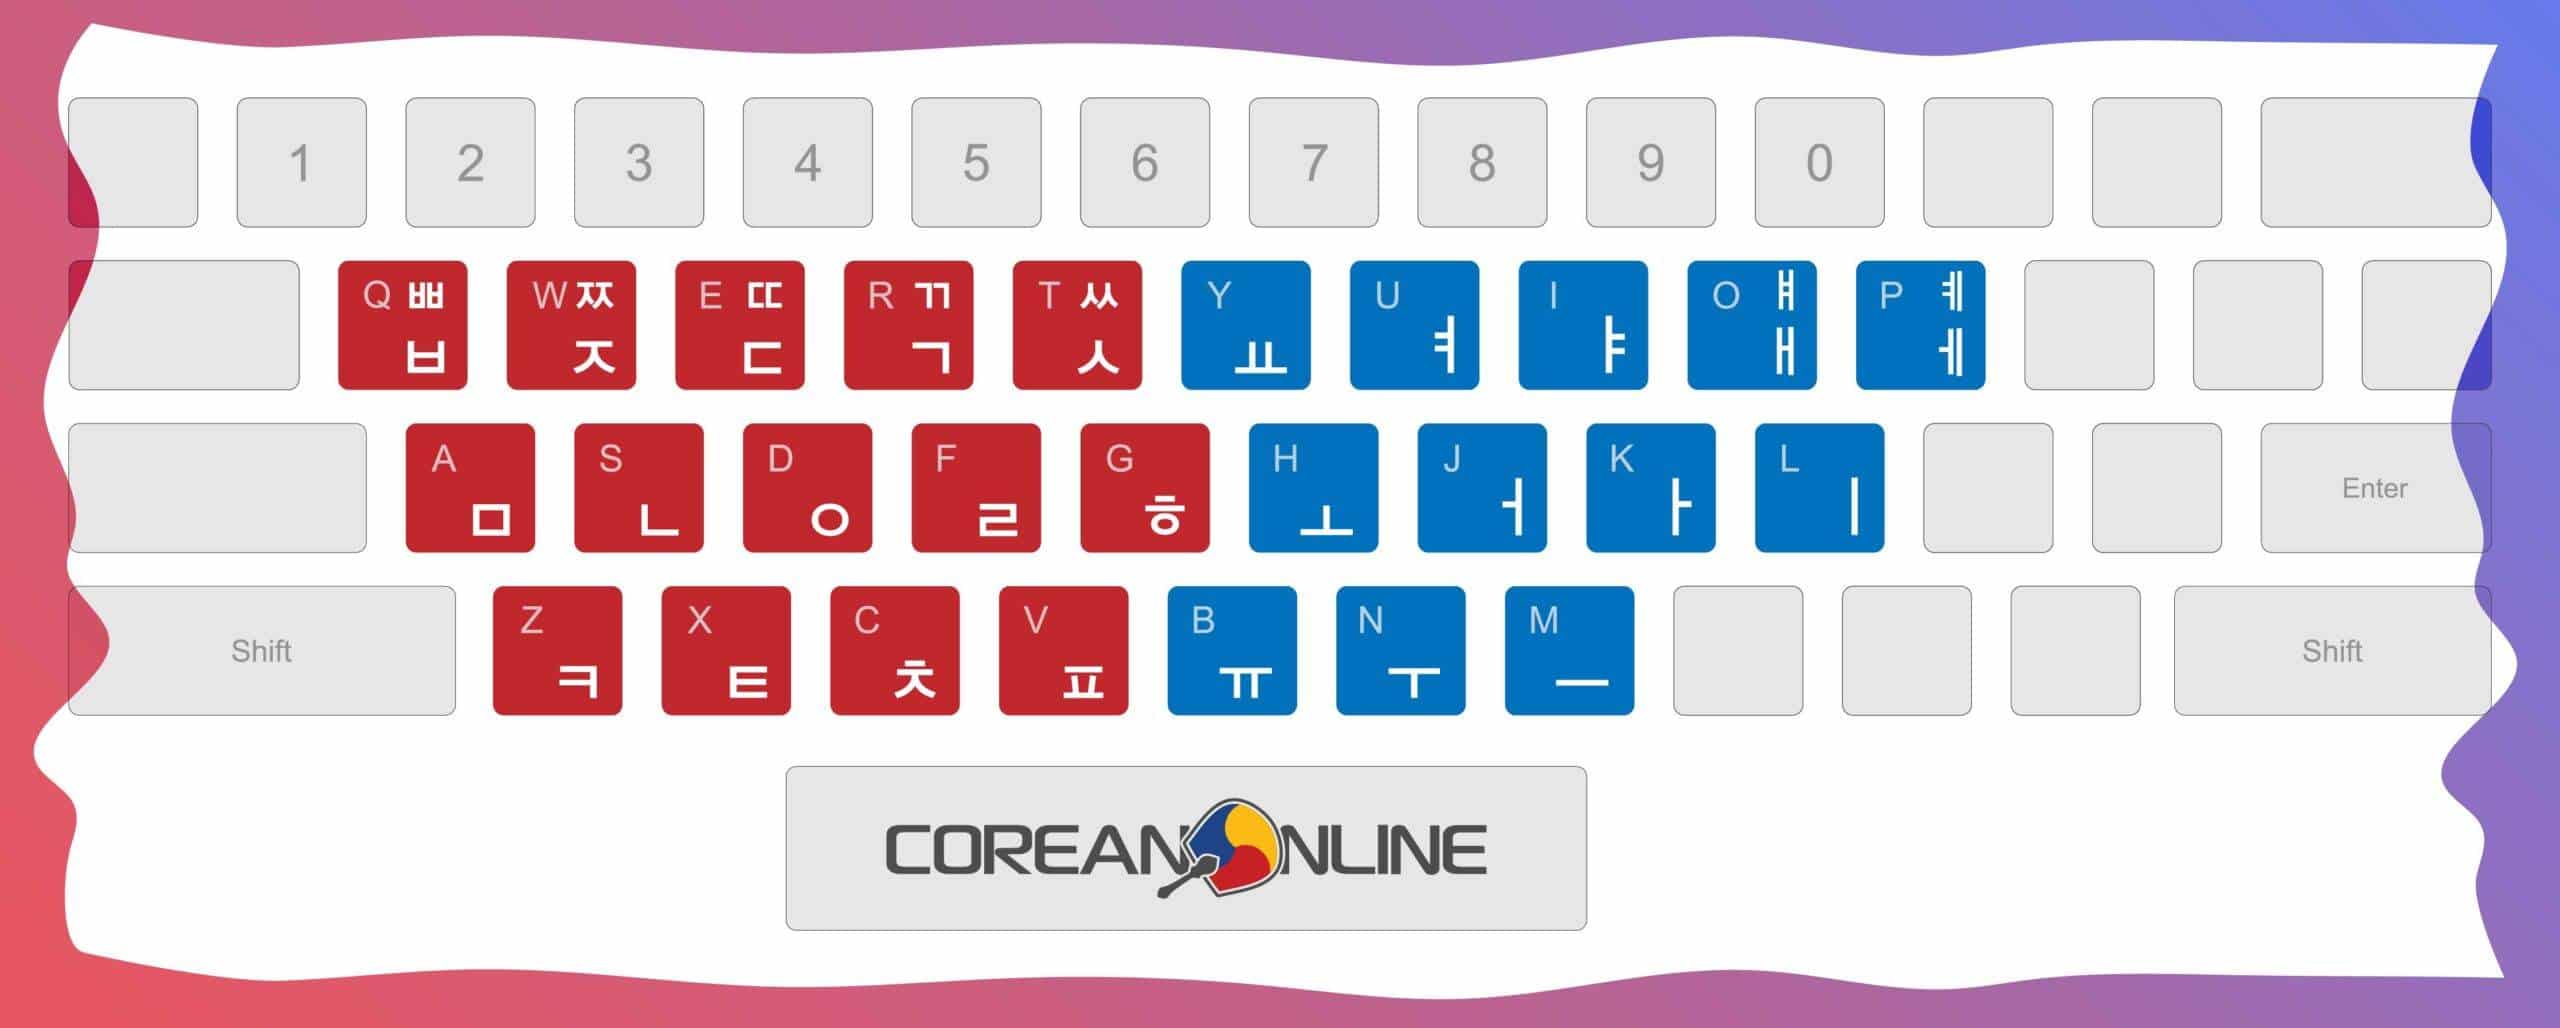 teclado coreano para computador ou celular